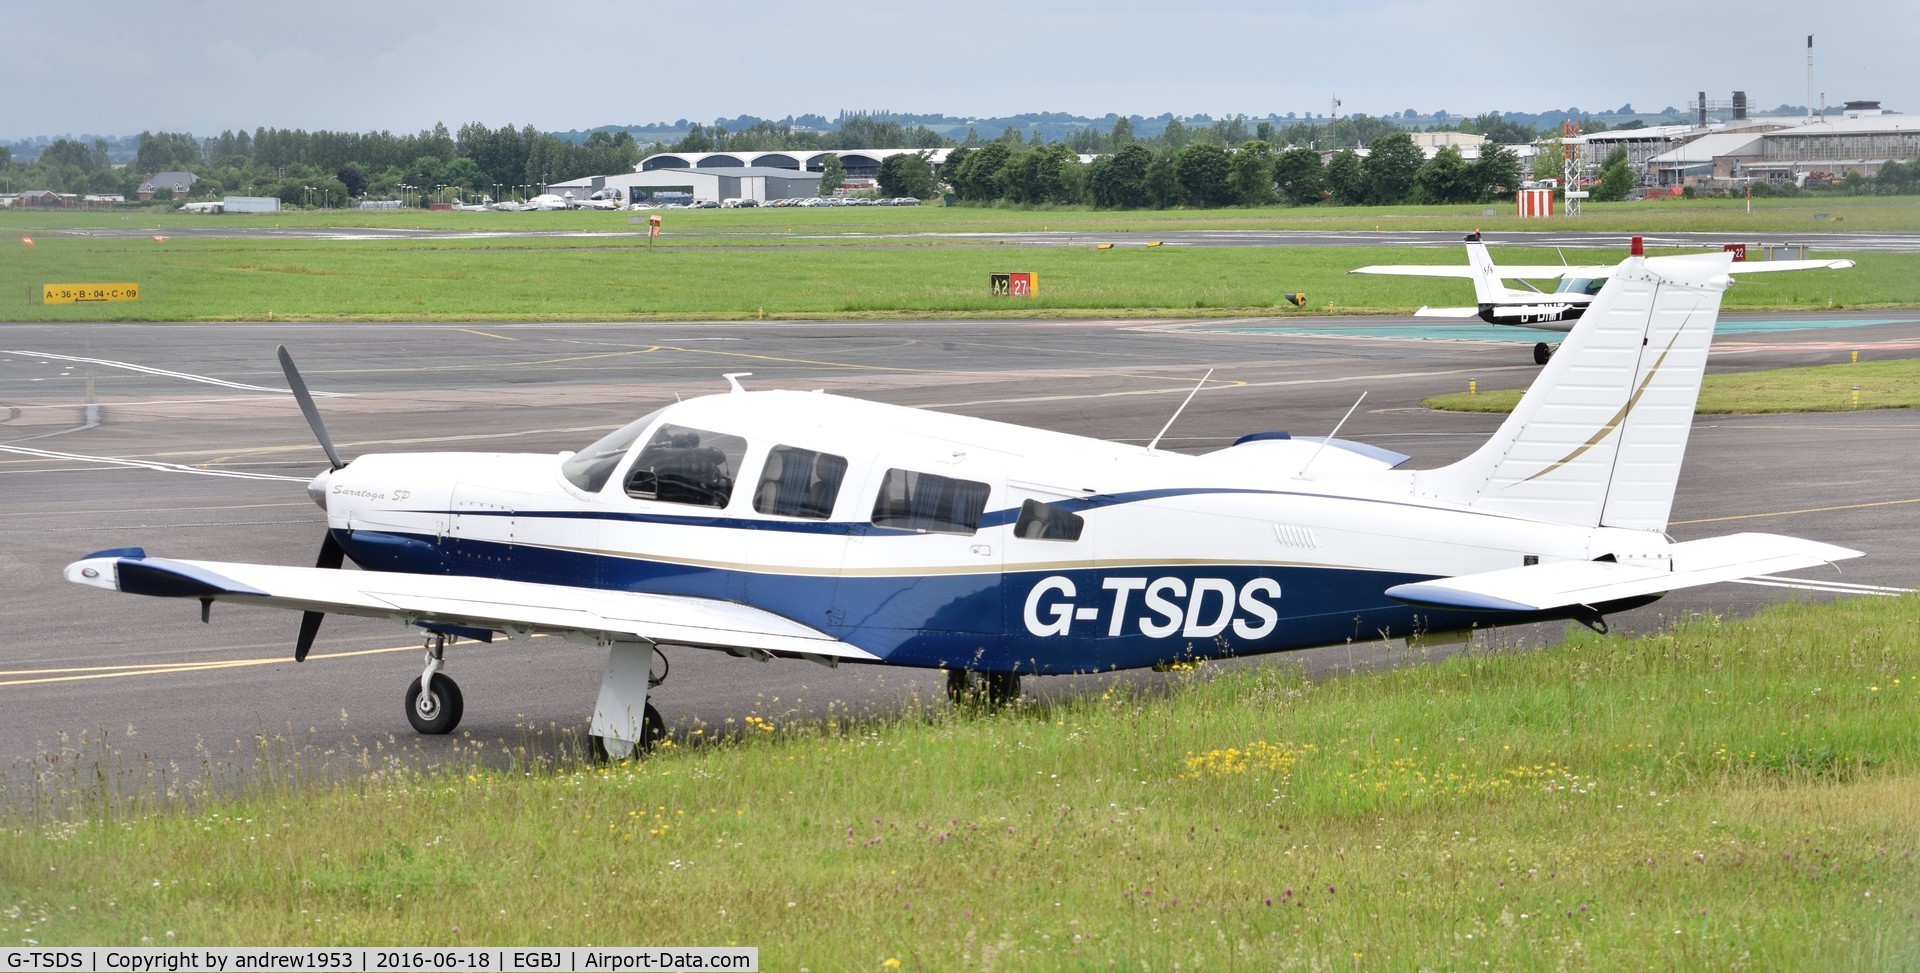 G-TSDS, 1980 Piper PA-32R-301 Saratoga SP C/N 32R-8013132, G-TSDS at Gloucestershire Airport.